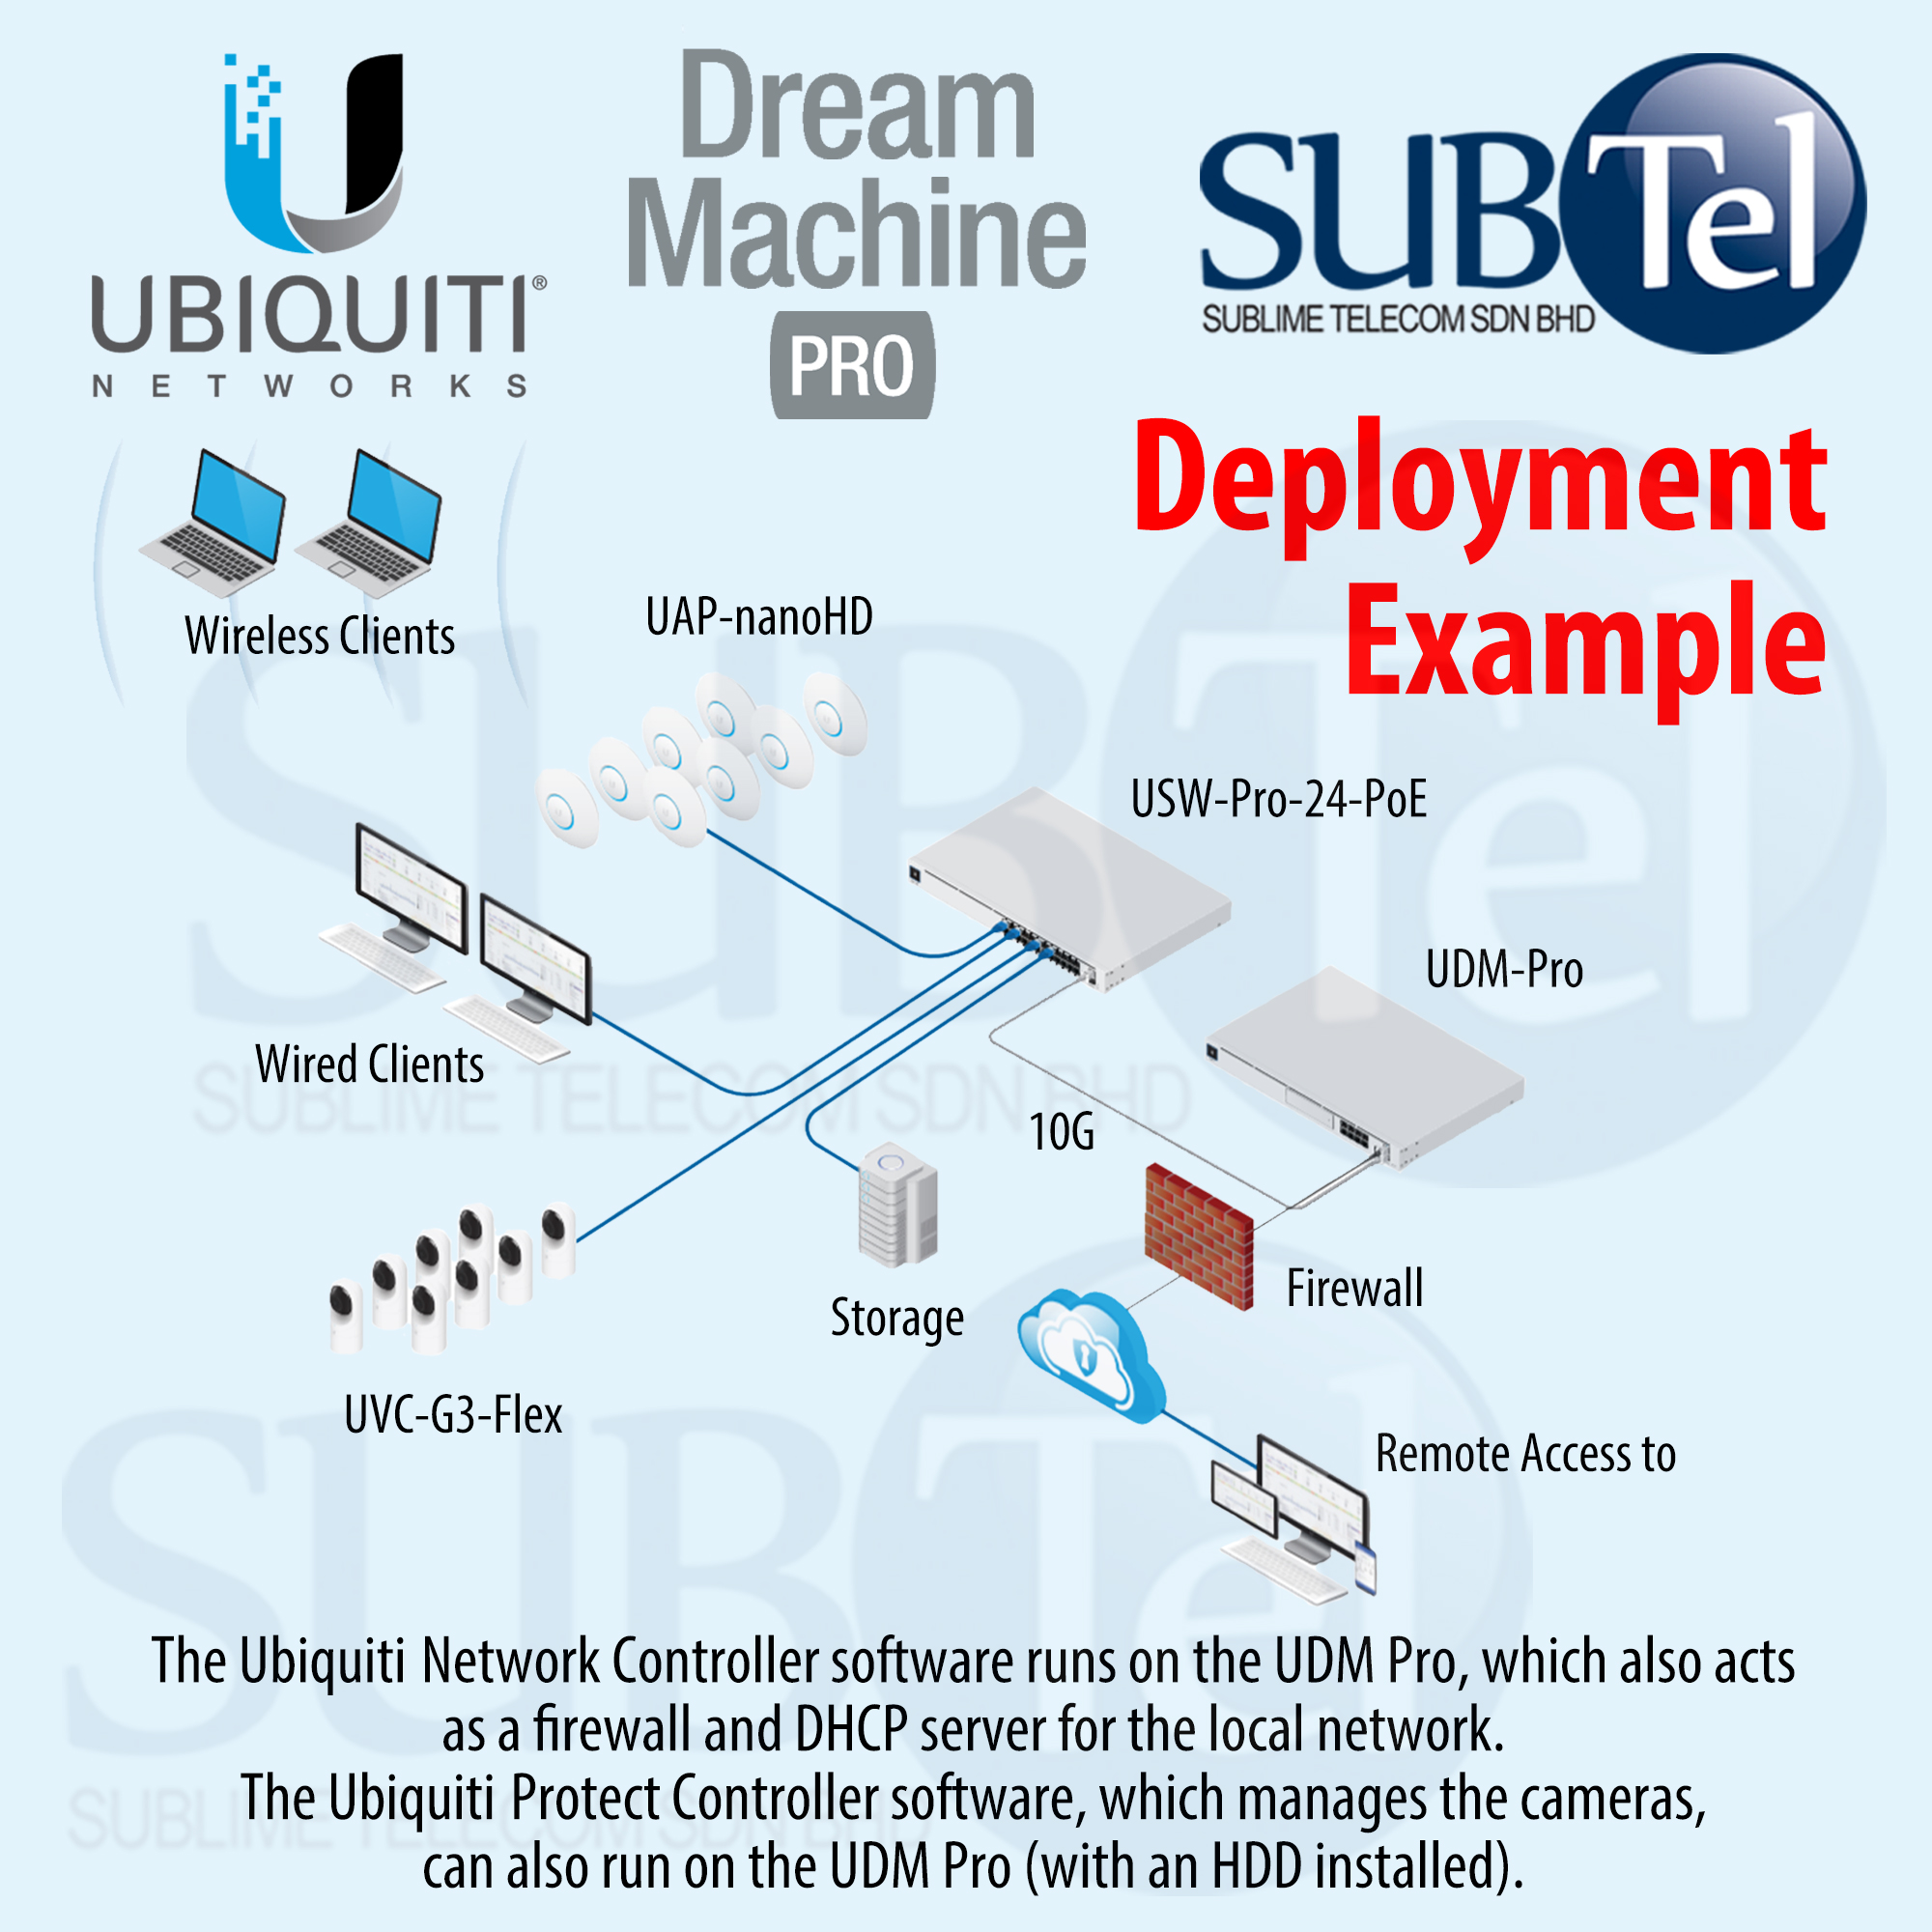 Ubiquiti UDM-PRO Dream Machine PRO Security Gateway with Switch